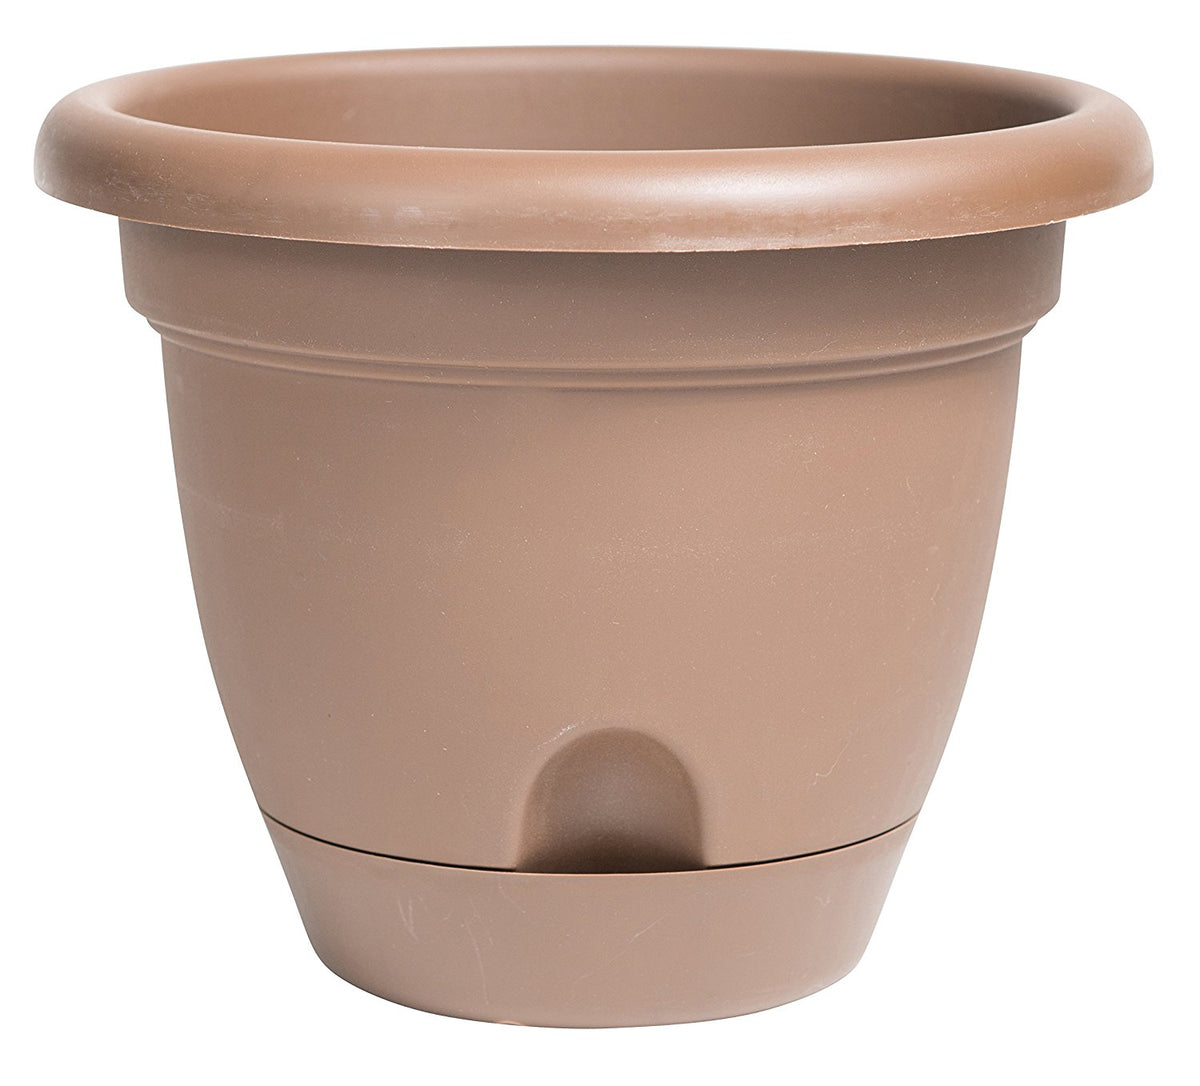 buy plant pots at cheap rate in bulk. wholesale & retail landscape supplies & farm fencing store.